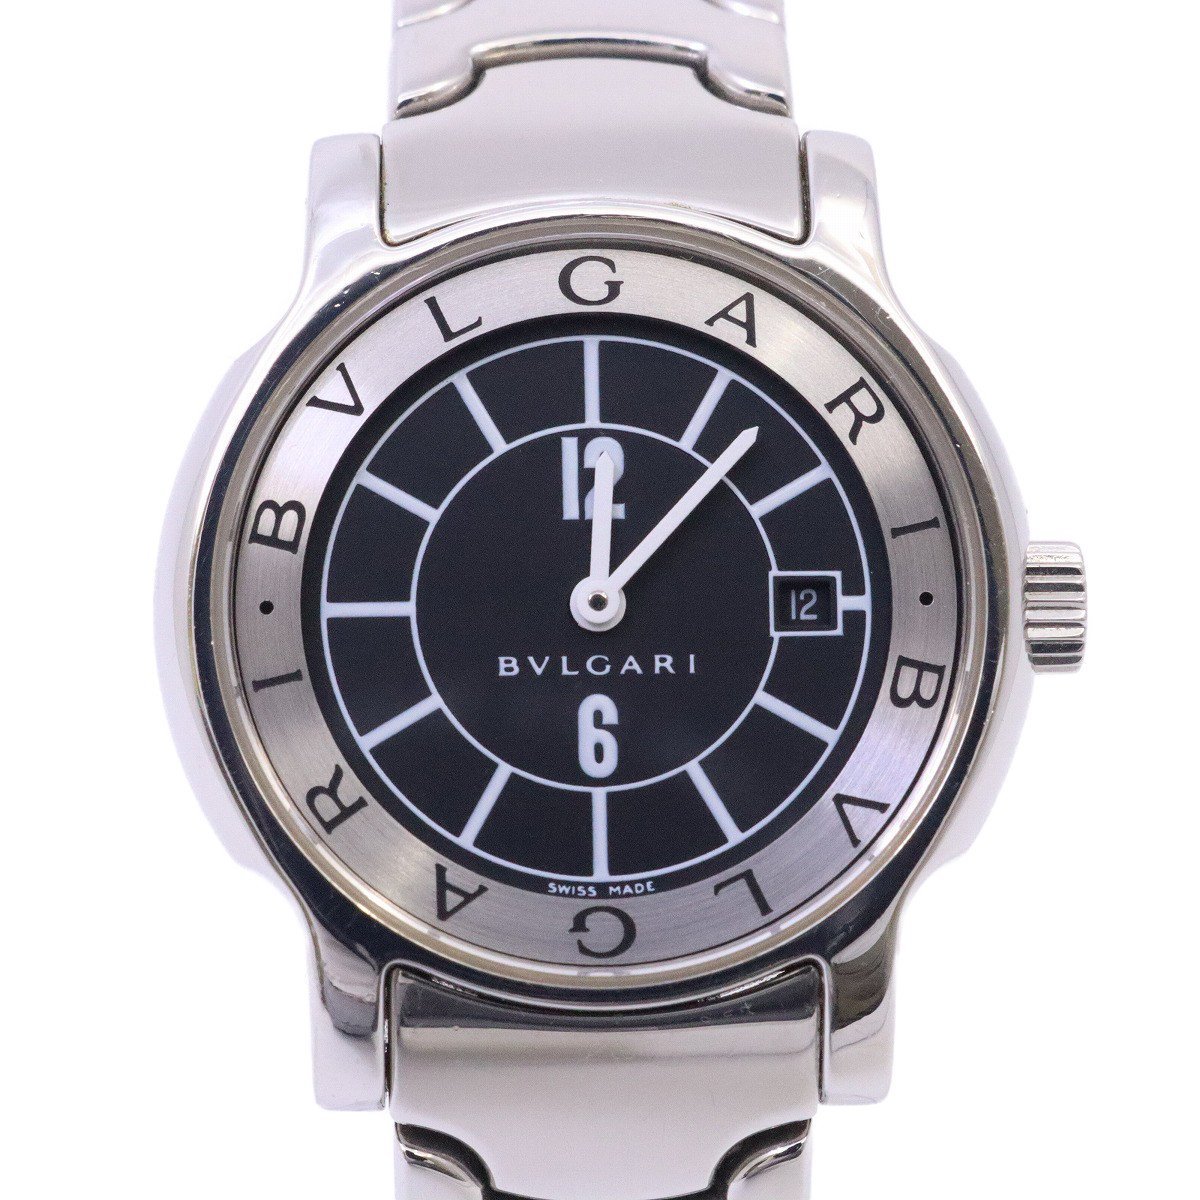  BVLGARY Solotempo кварц женские наручные часы чёрный циферблат оригинальный SS ремень ST29S[... ломбард ]